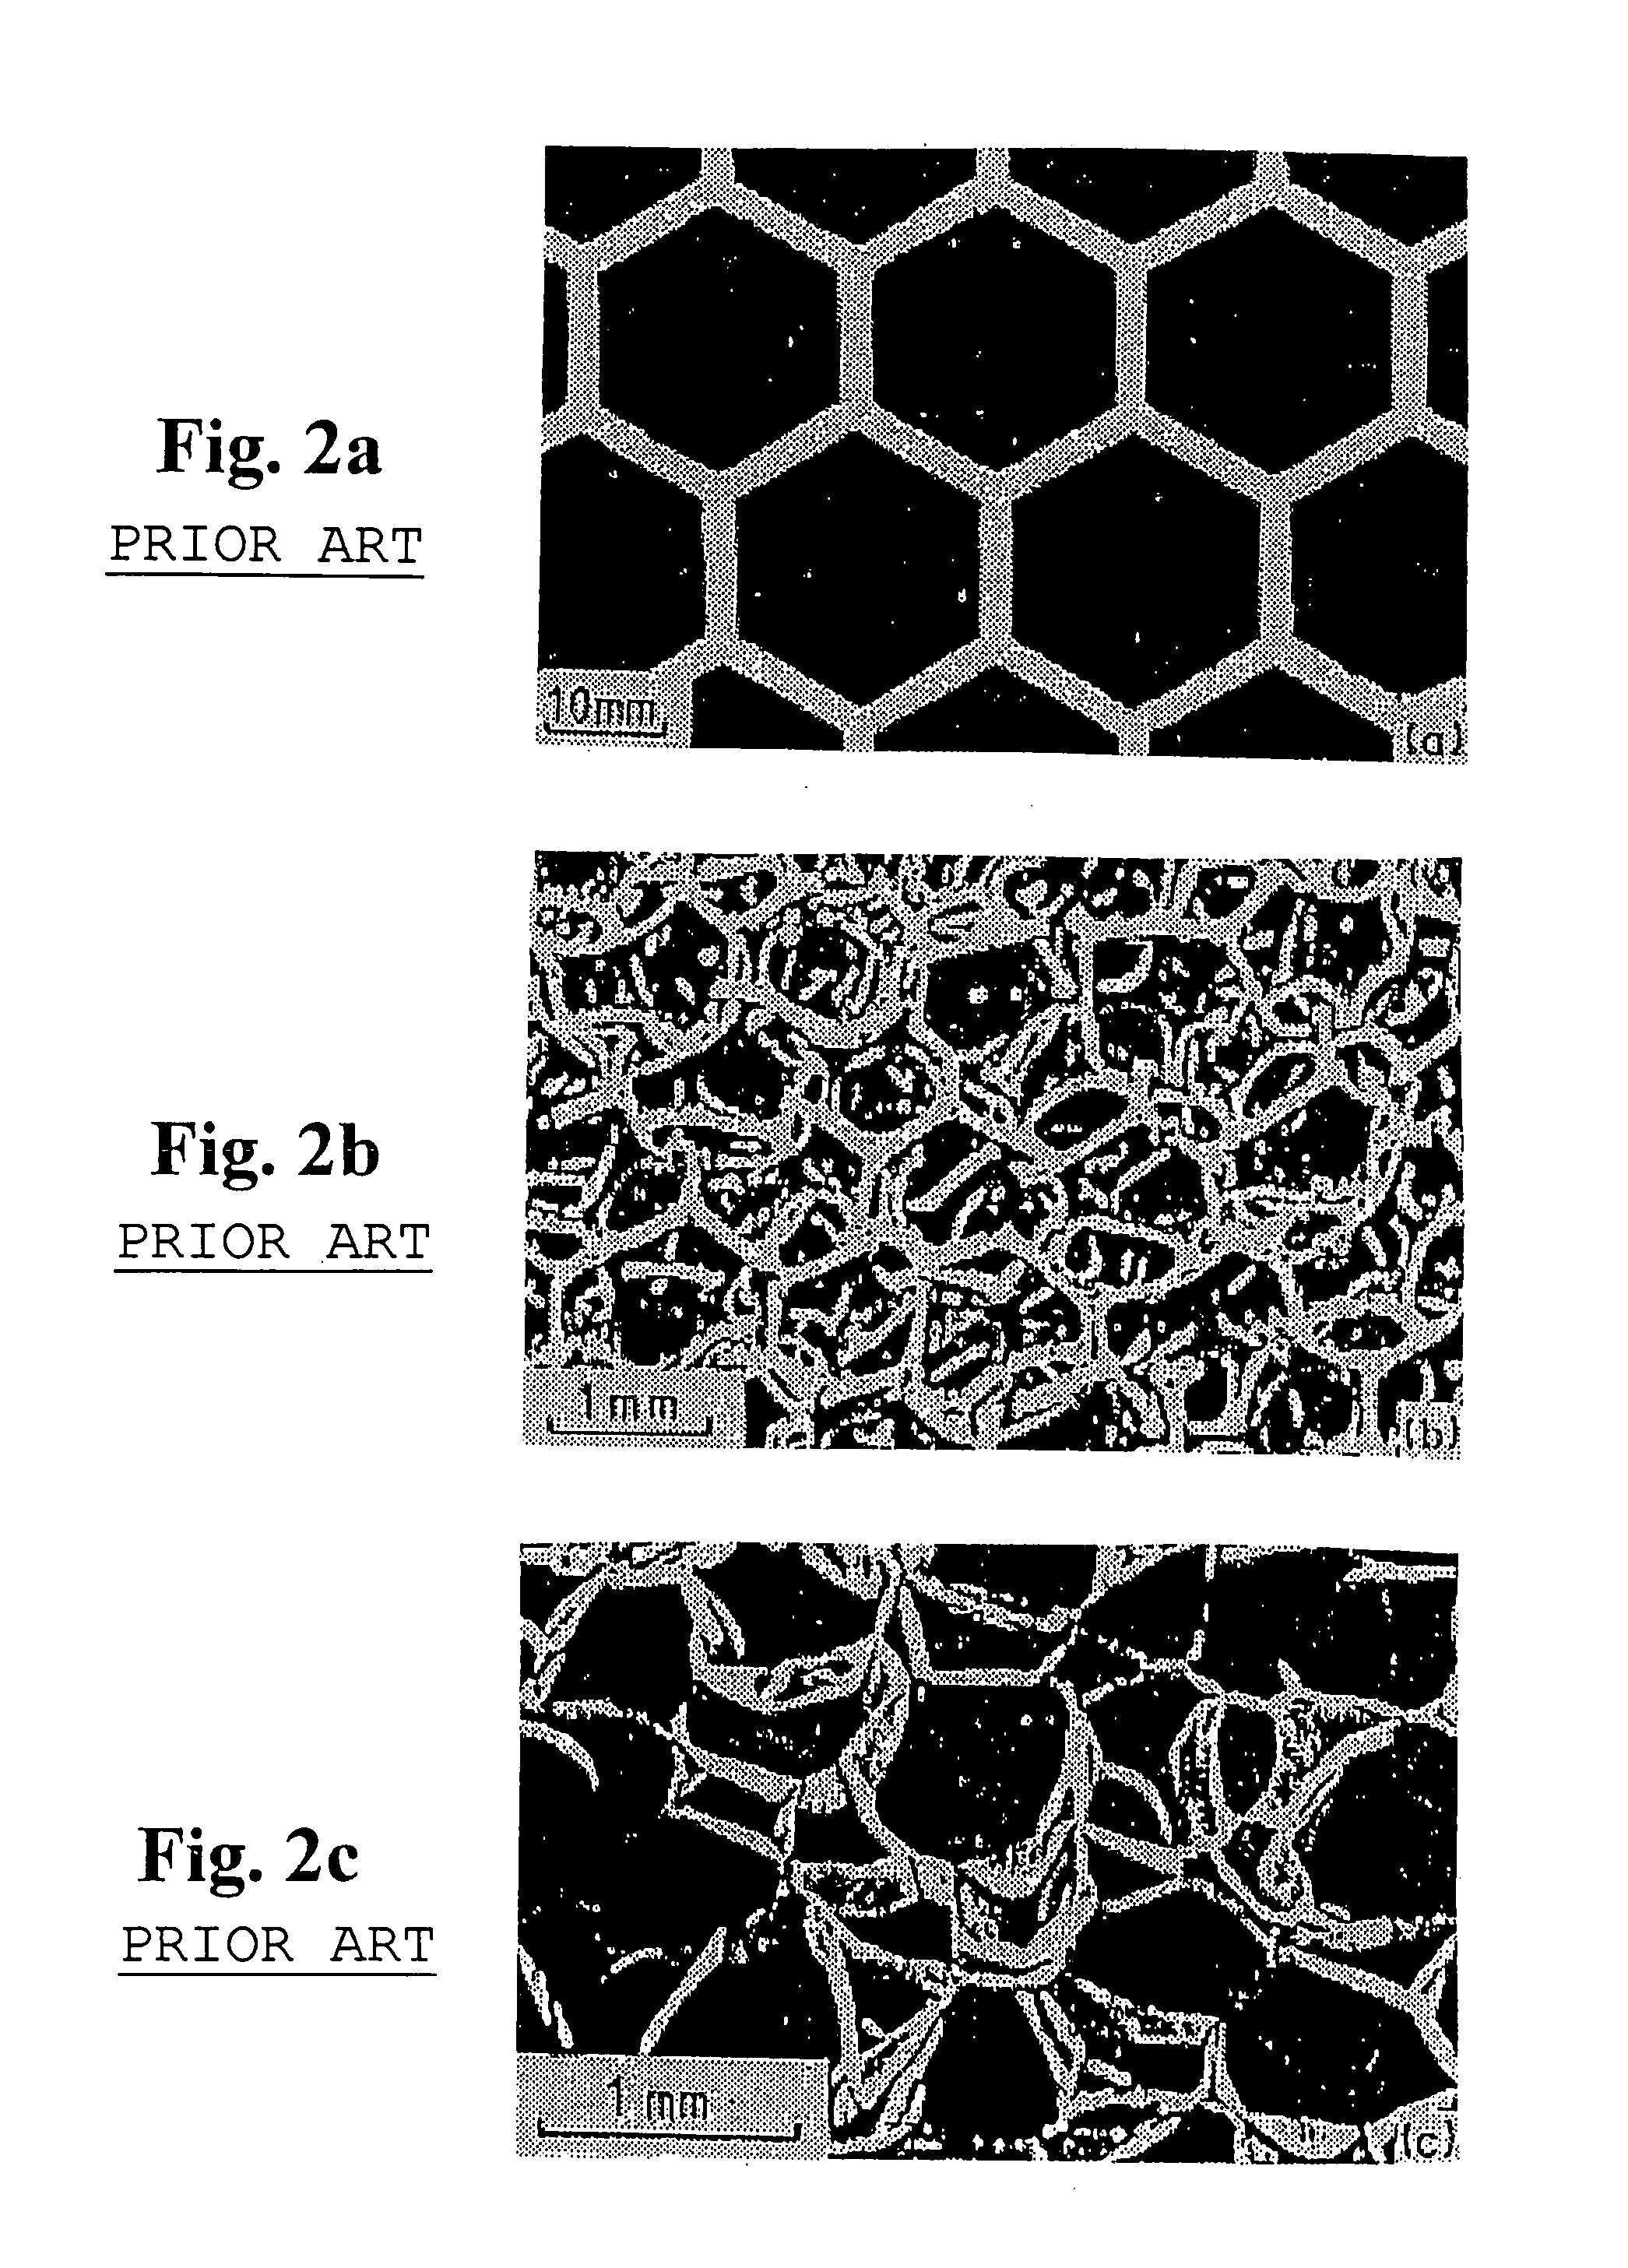 Composite foam structures